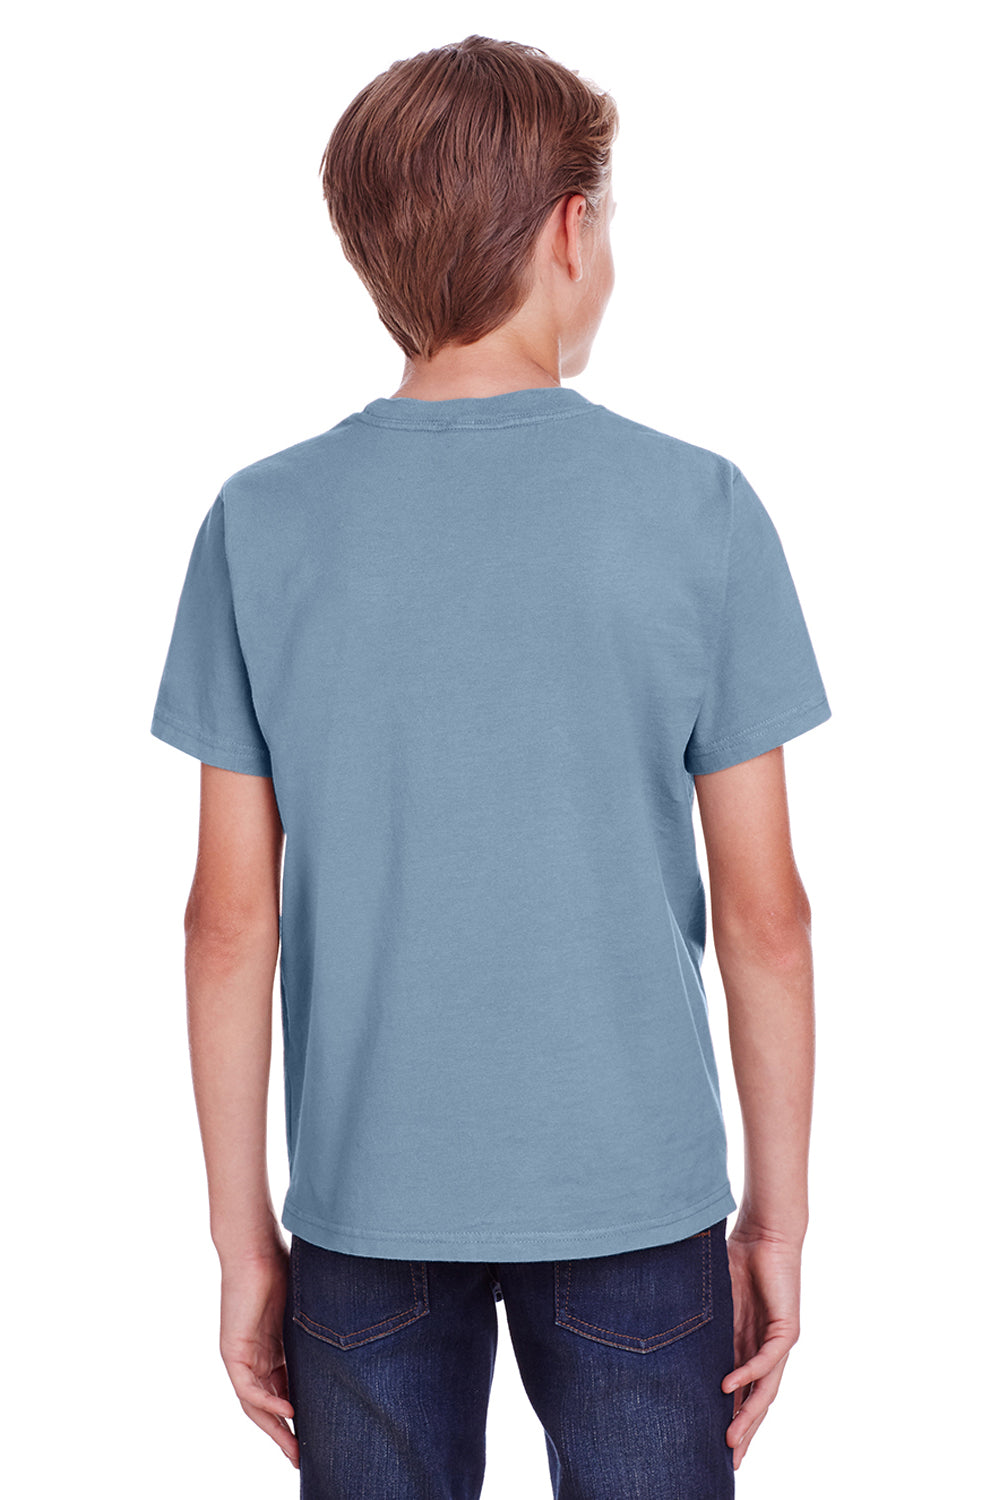 ComfortWash by Hanes GDH175 Youth Short Sleeve Crewneck T-Shirt Saltwater Blue Back